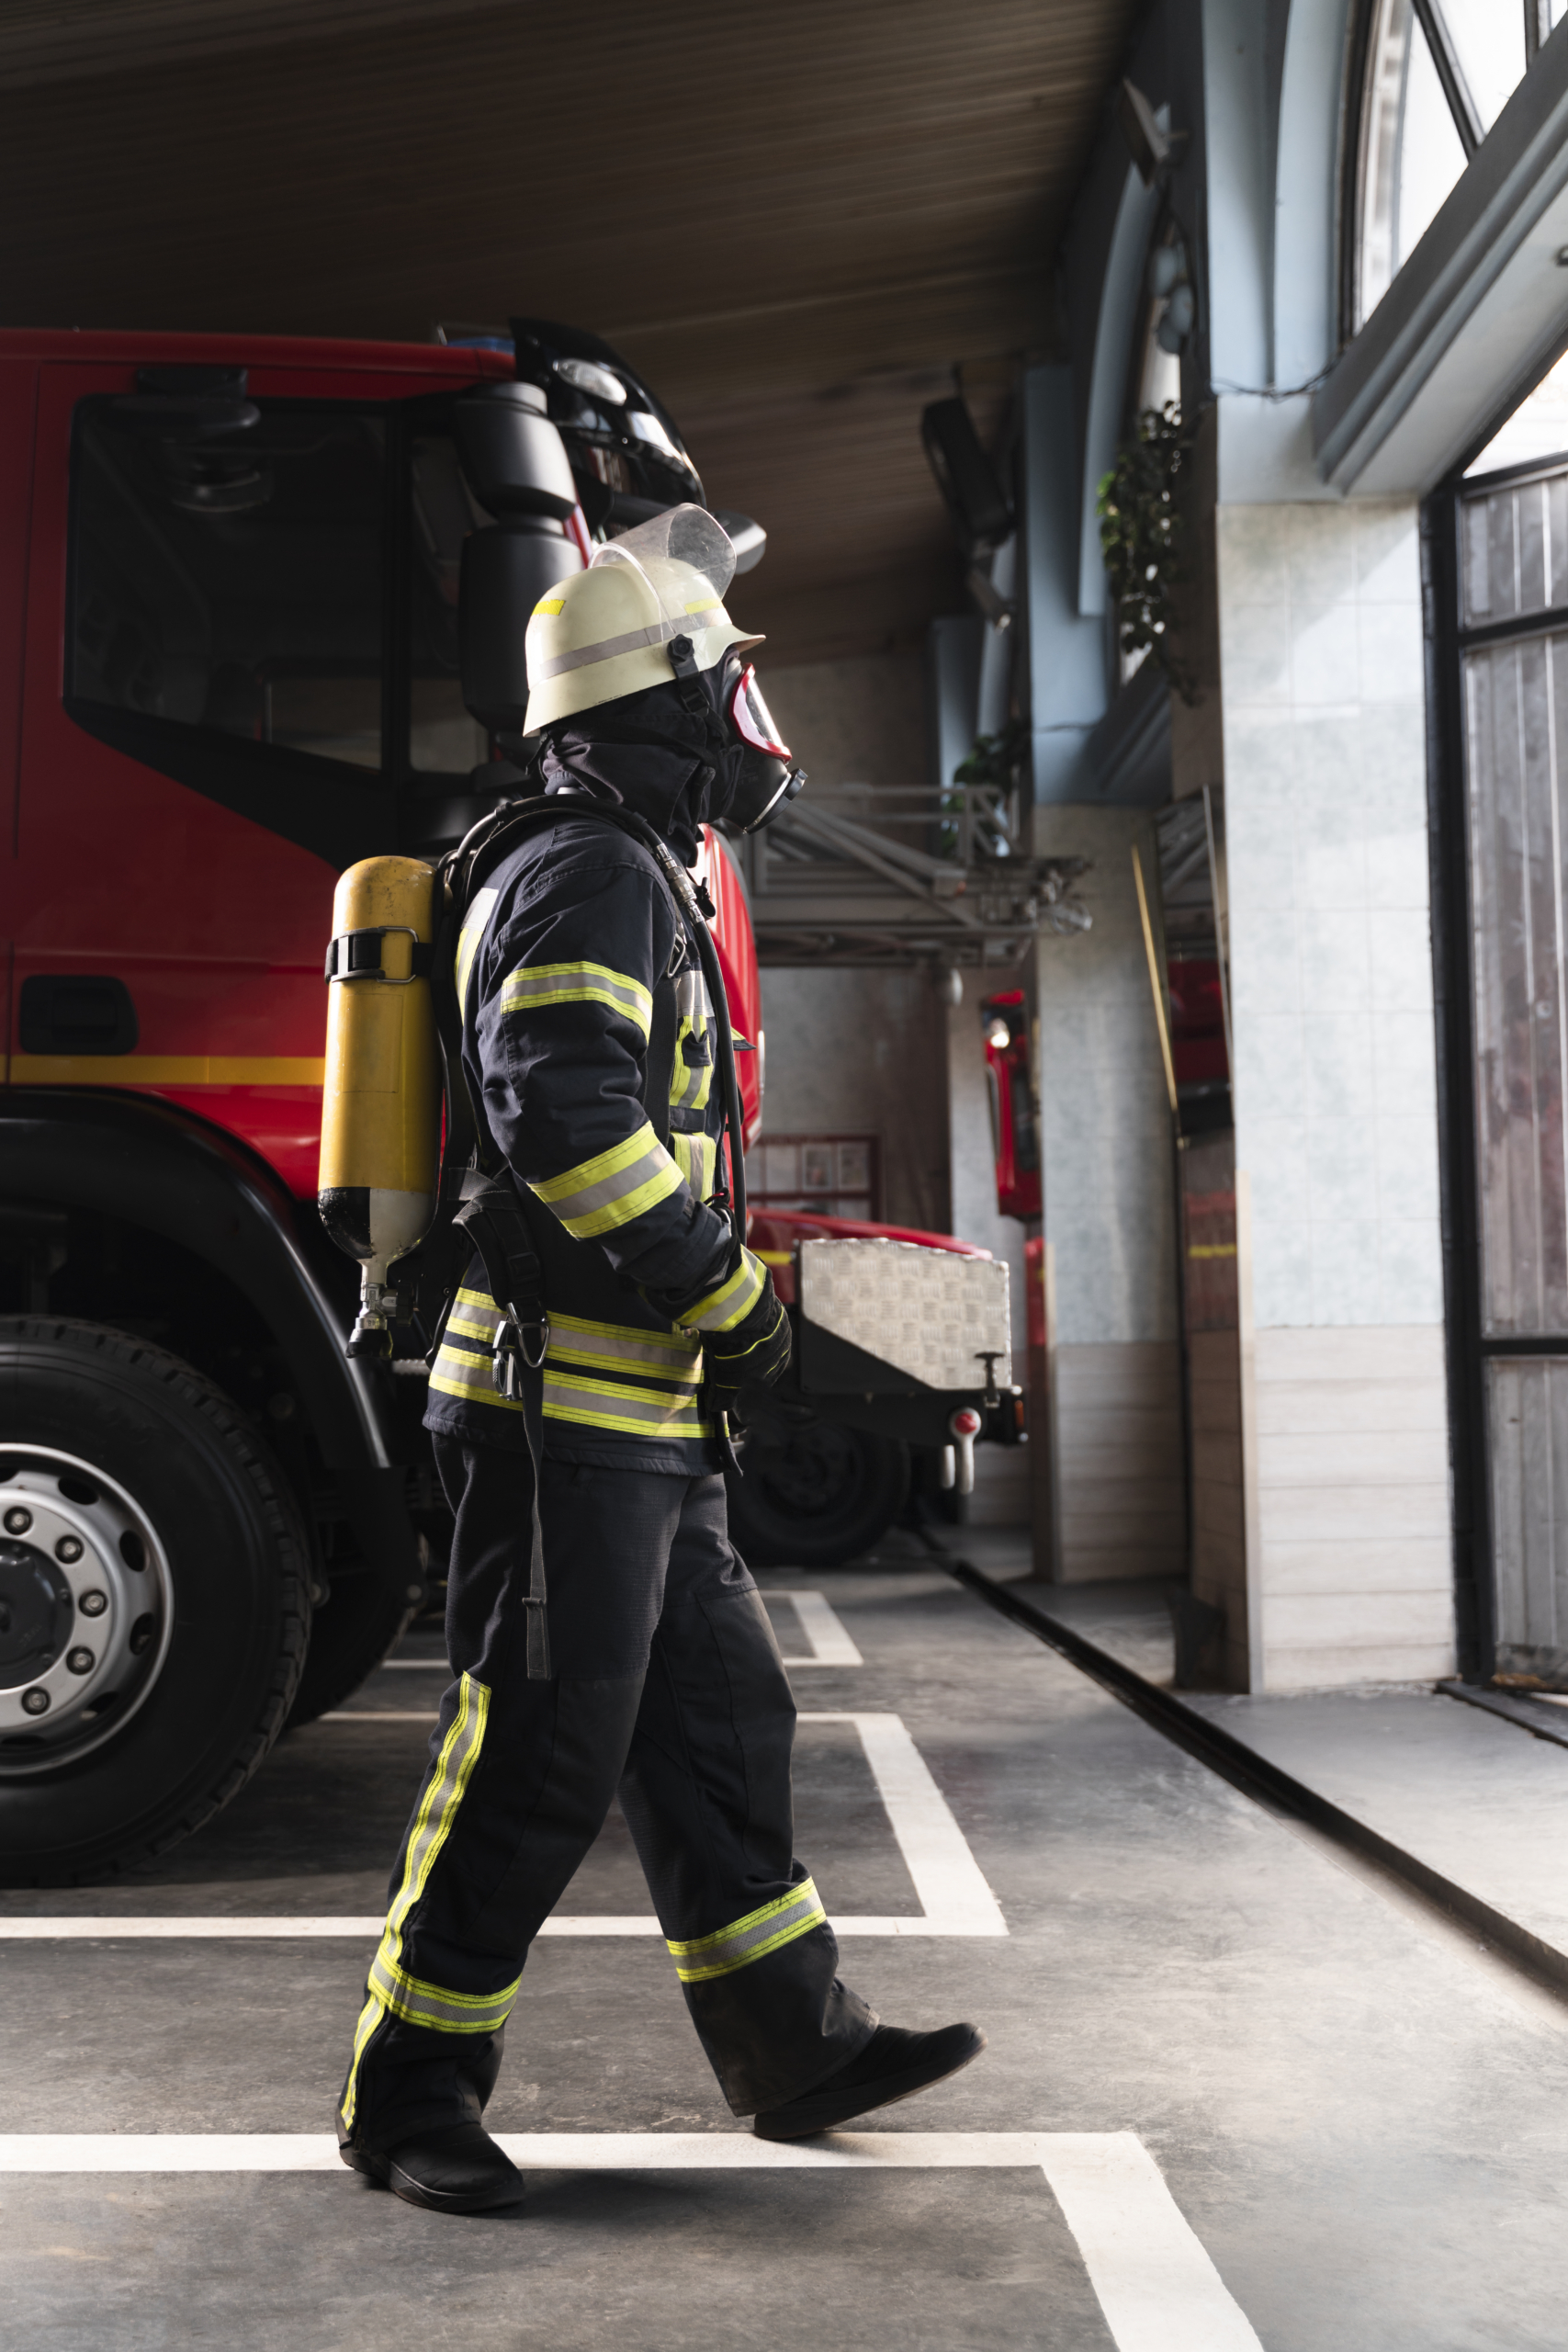 bombero-estacion-equipado-traje-protector-mascara-contra-incendios